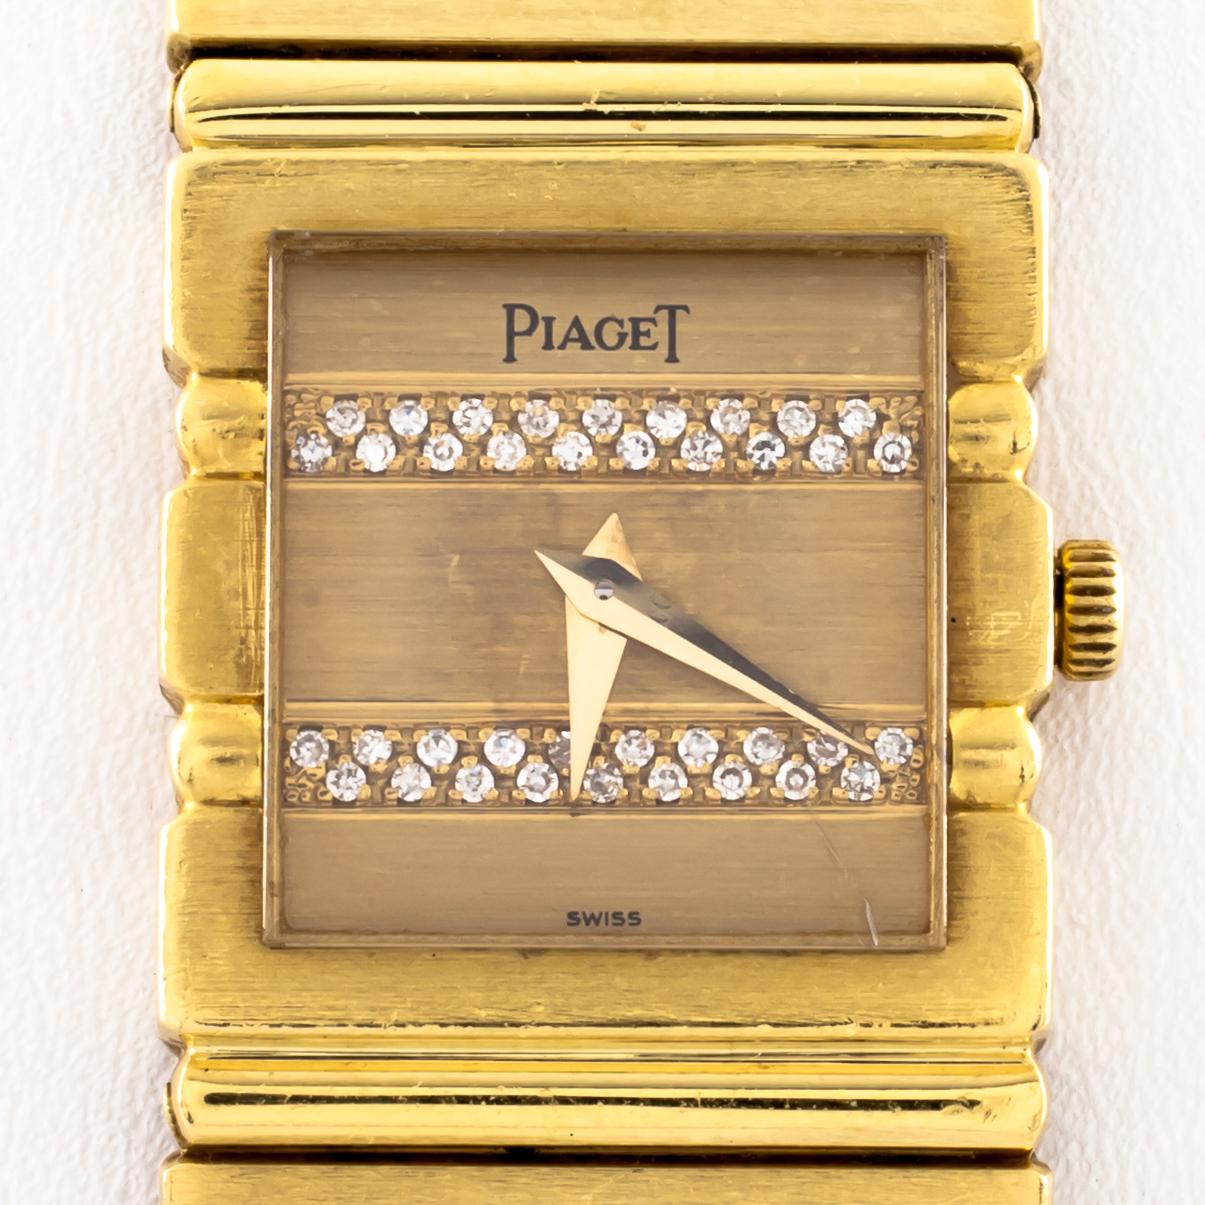 piaget quartz watch